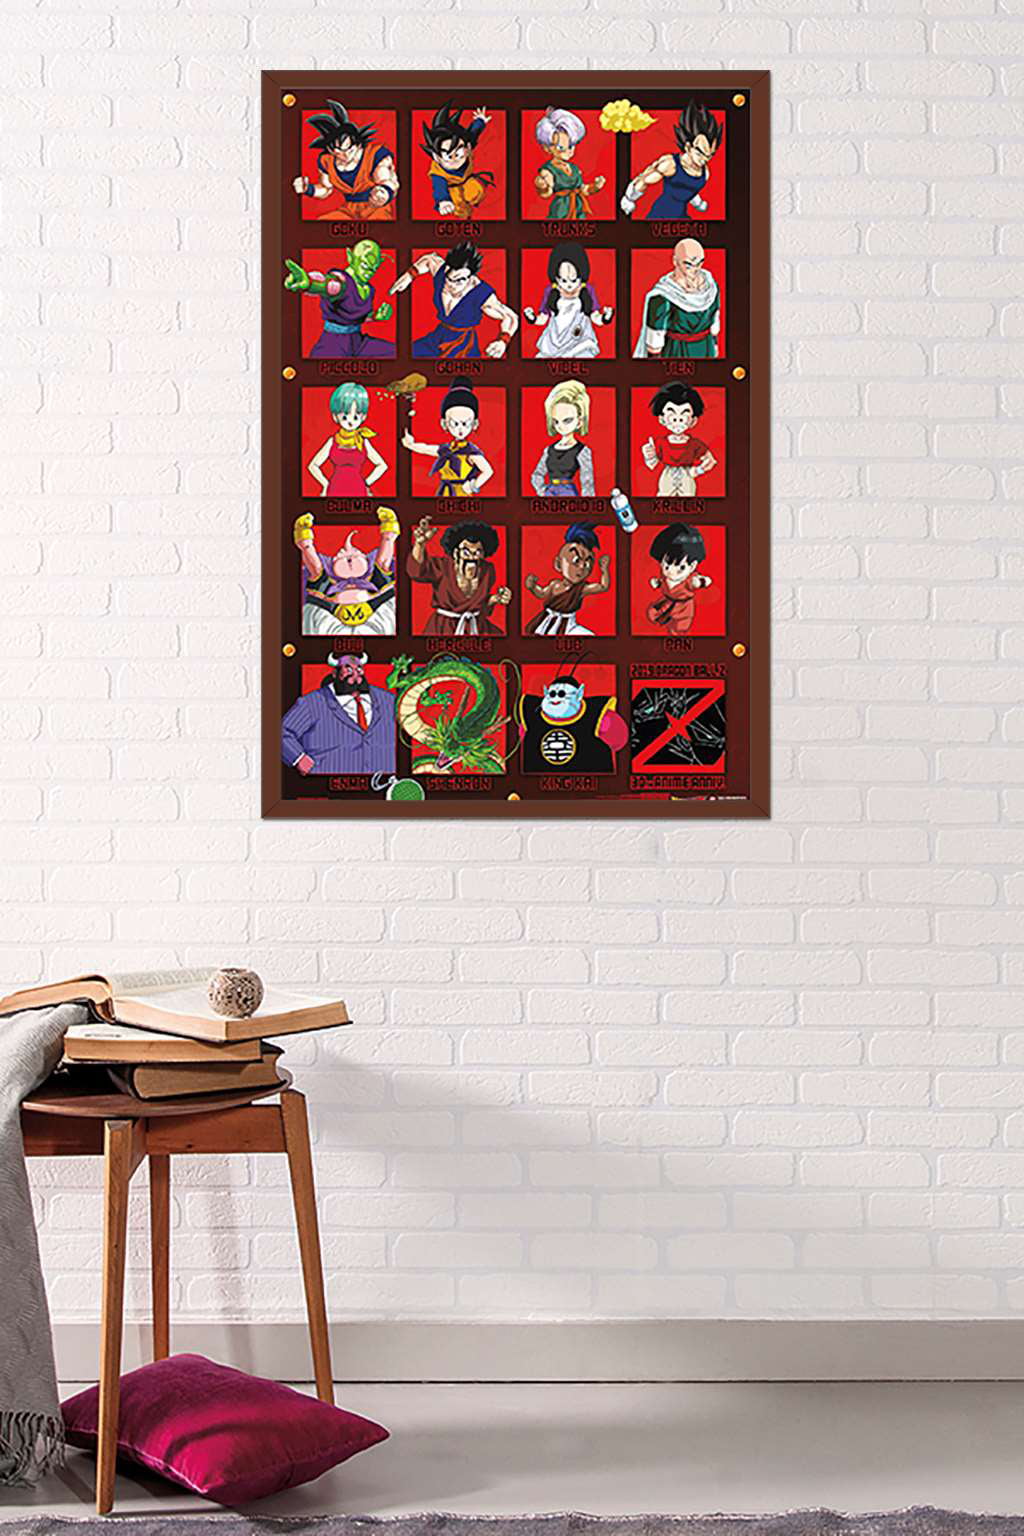 Dragon Ball Z Super Neon Poster - 22.375 x 34 